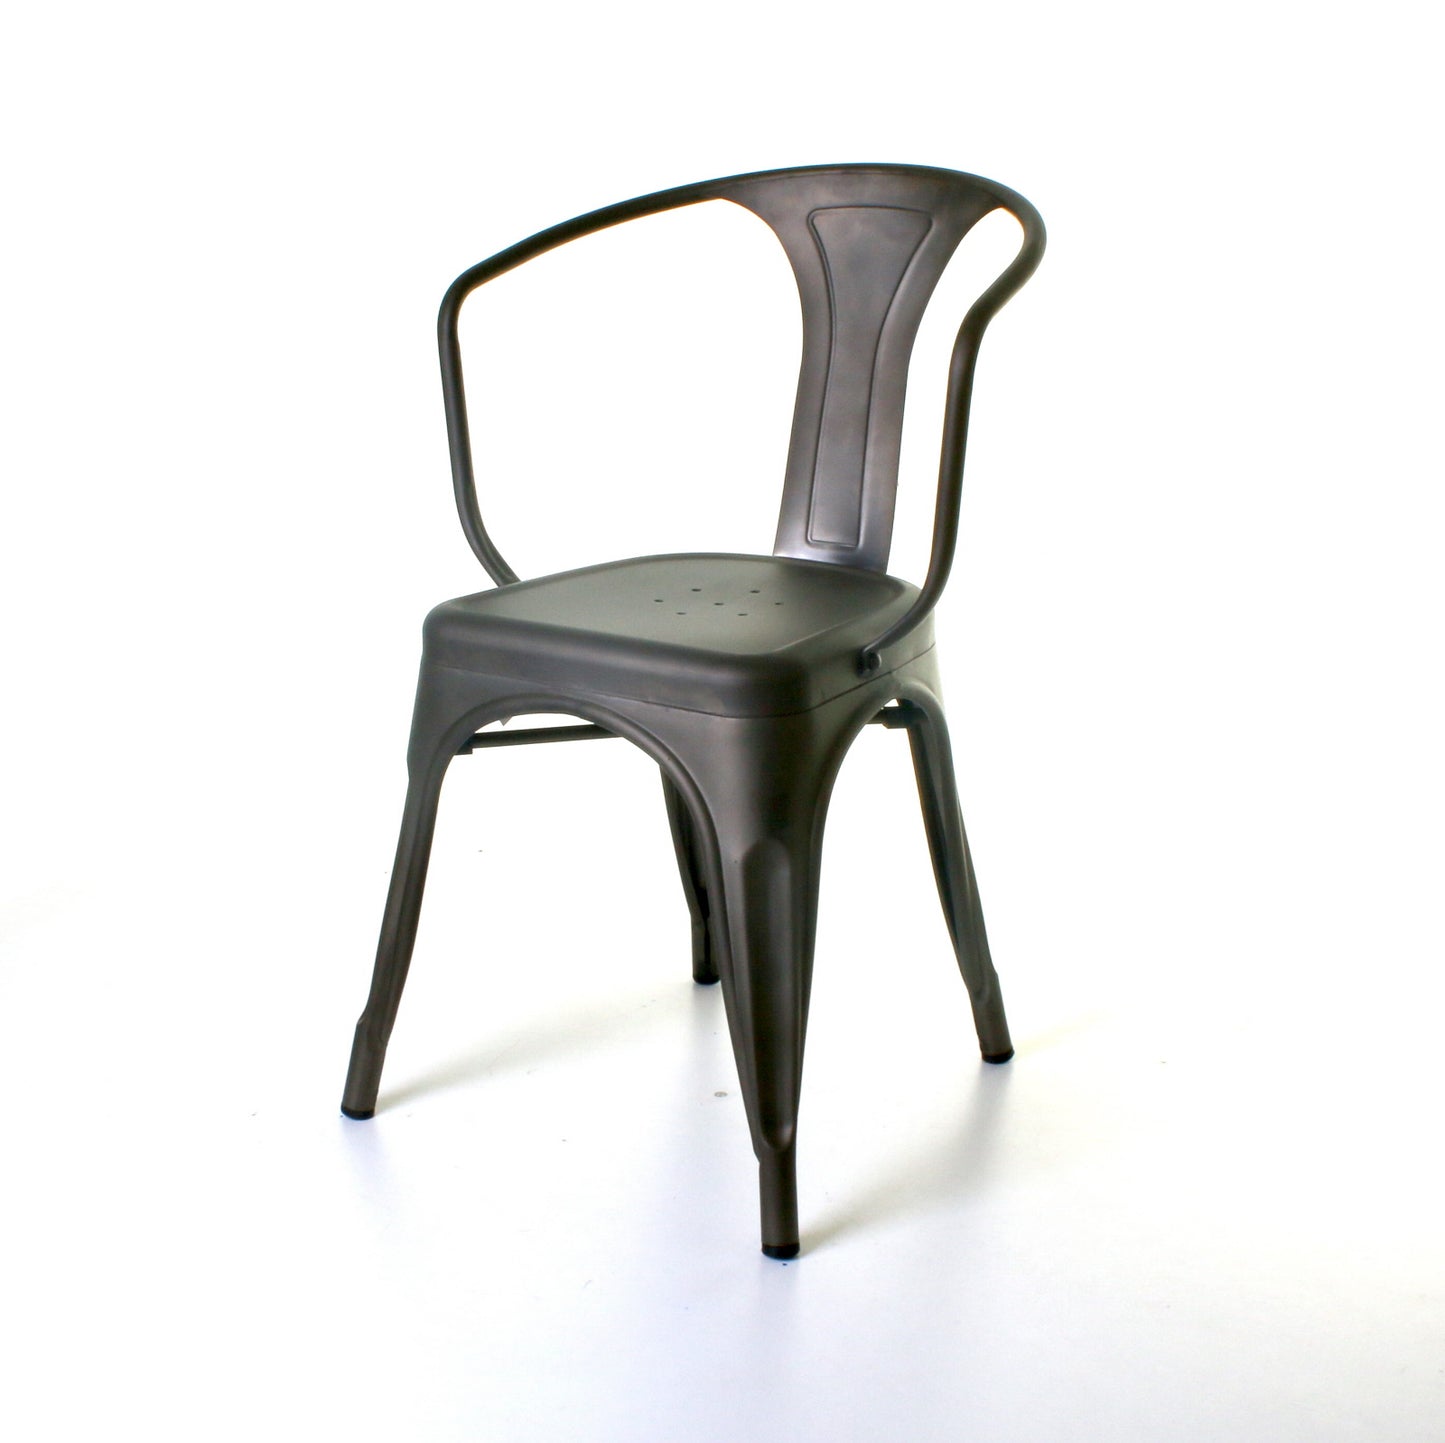 7PC Taranto Table & 6 Forli Chairs Set - Gun Metal Grey